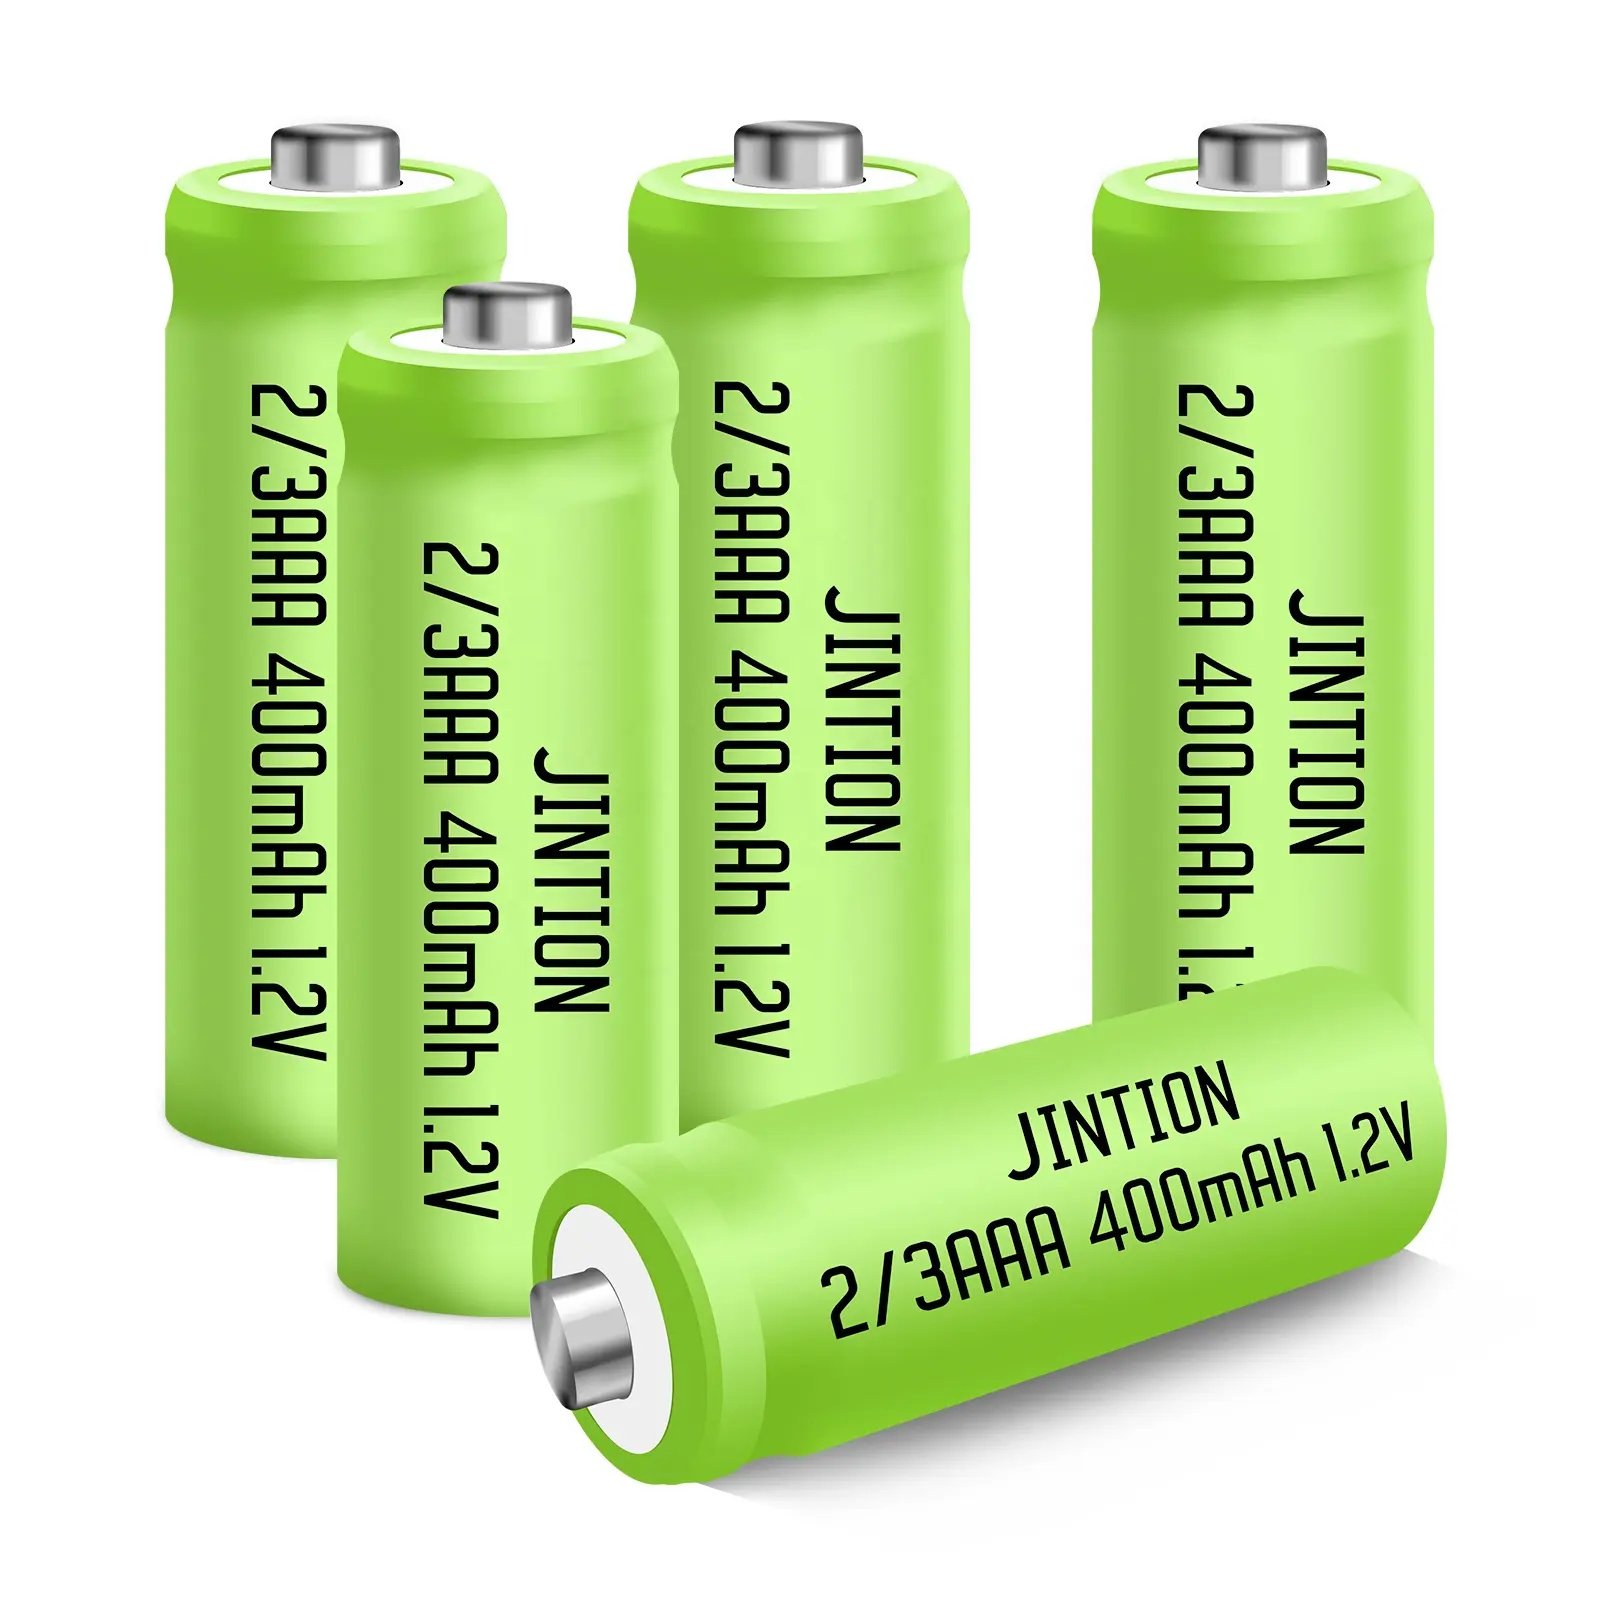 JINTION NIMH 2/3AAA 400MAH 1.2V nimh batterie rechargeable ni-mh batterie batterie aa rechargeable pour lumière solaire